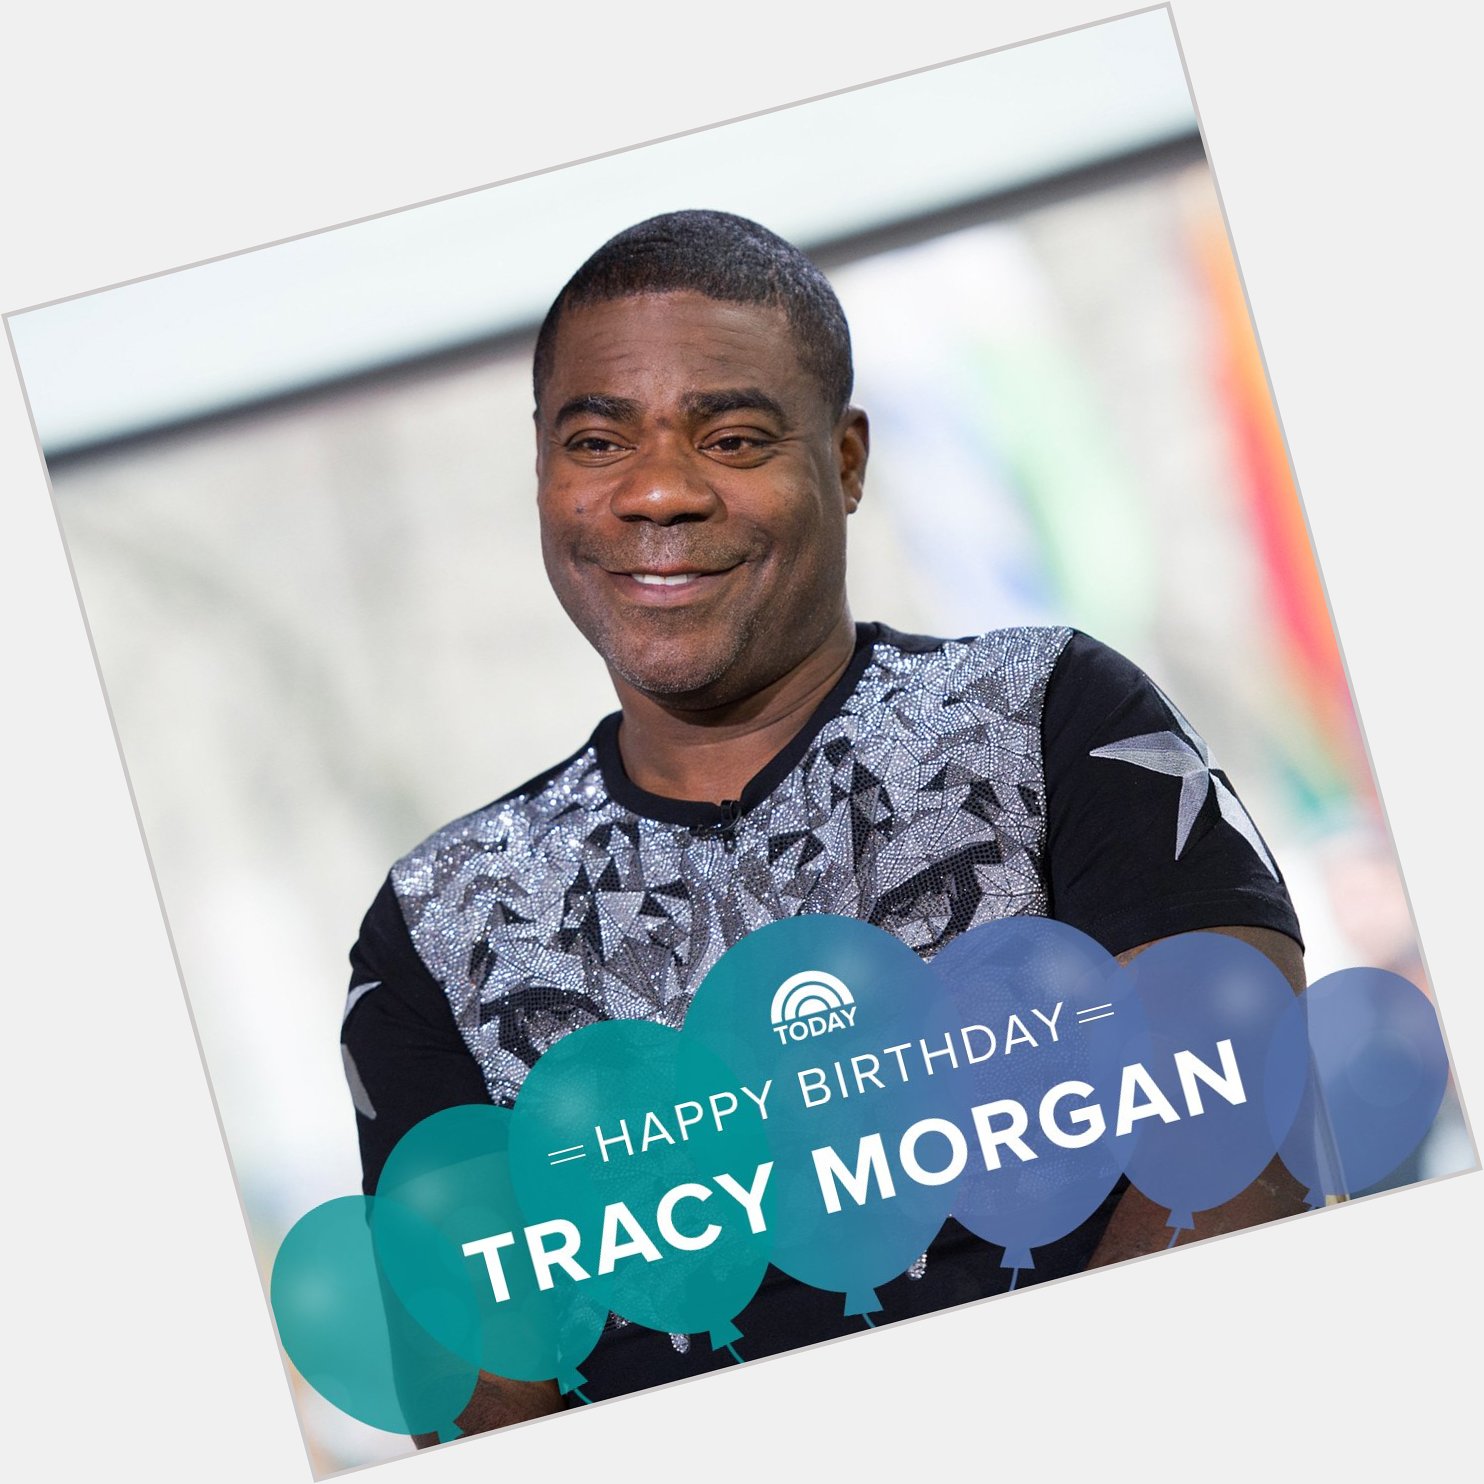 Happy 50th birthday, Tracy Morgan!  